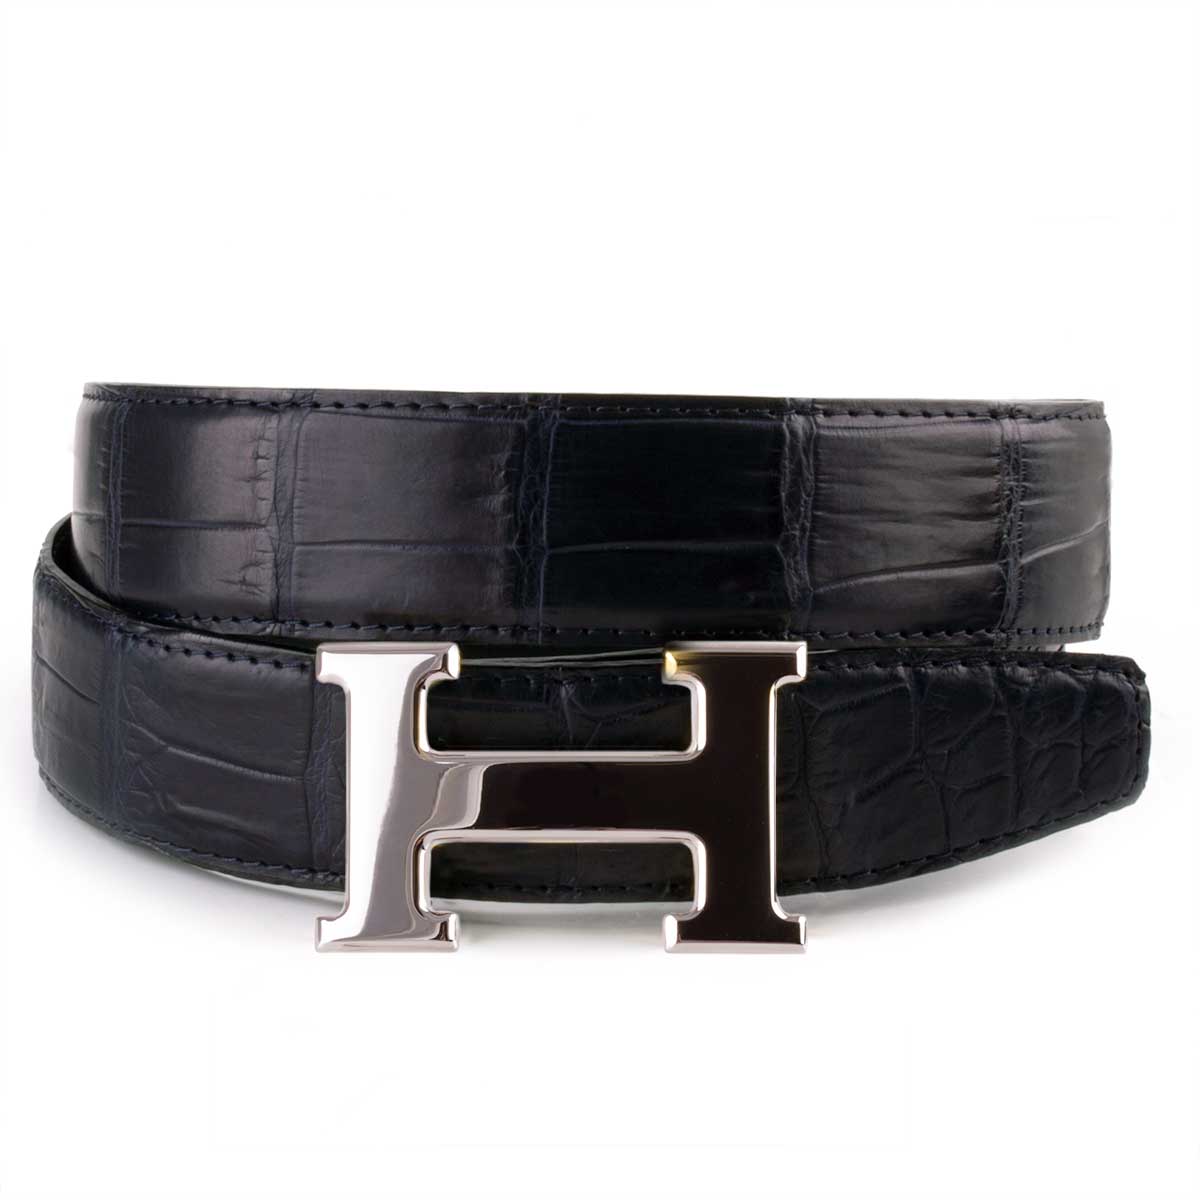 Classic leather belt with polished steel "H" buckle - Alligator (black, navy blue, blue)